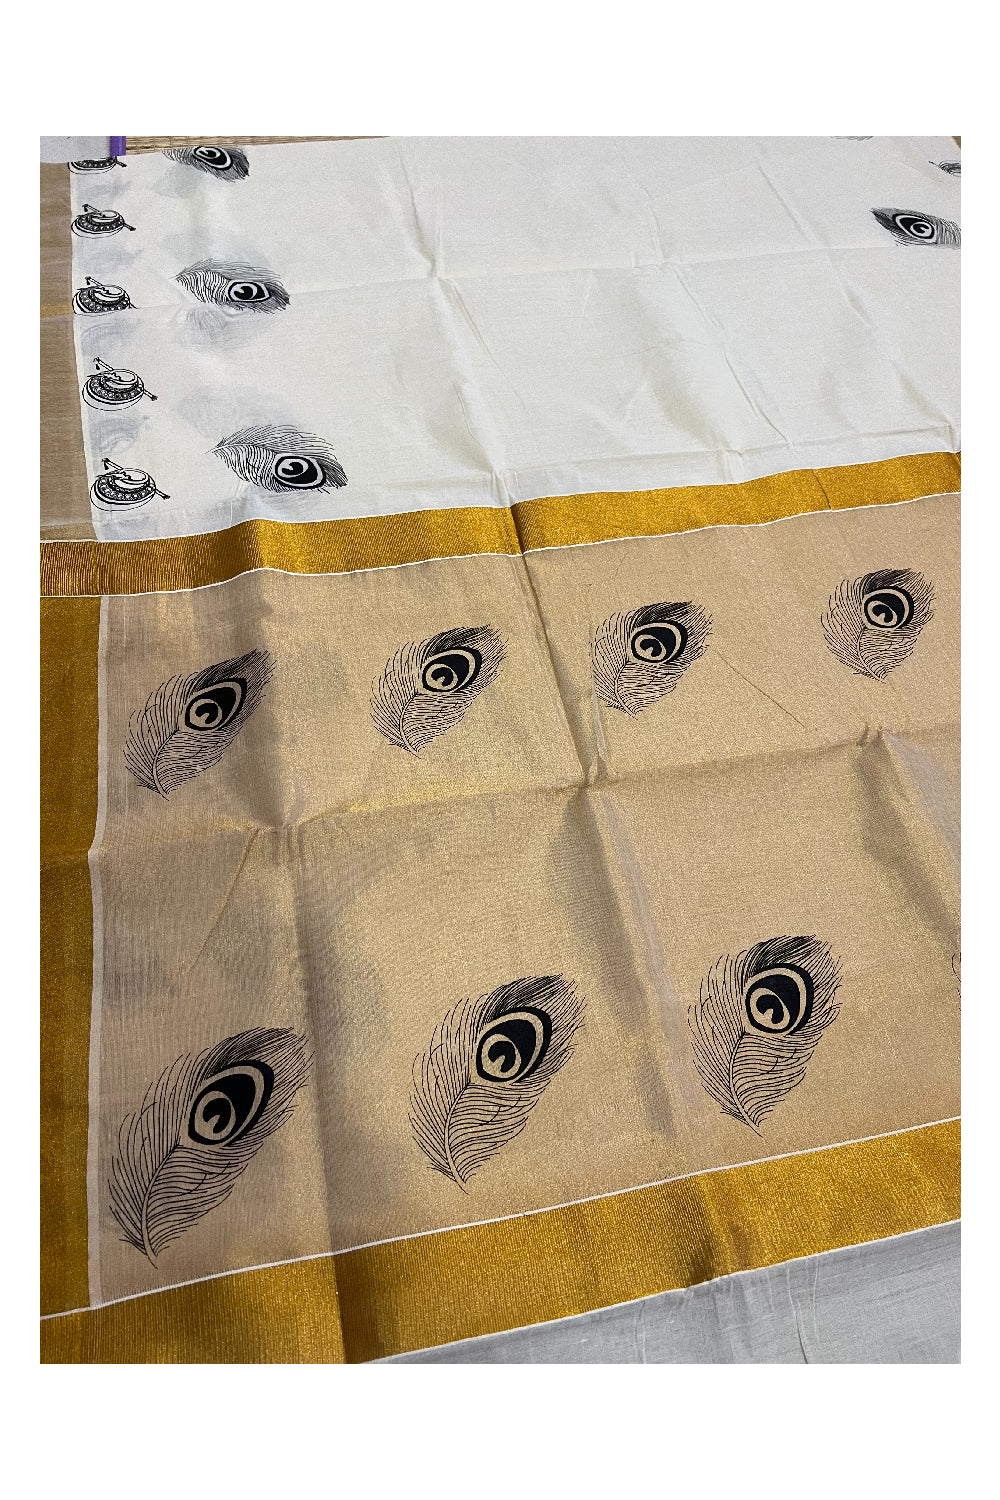 Kerala Cotton Kasavu Saree with Black Feather Block Prints on Border and Tissue Pallu